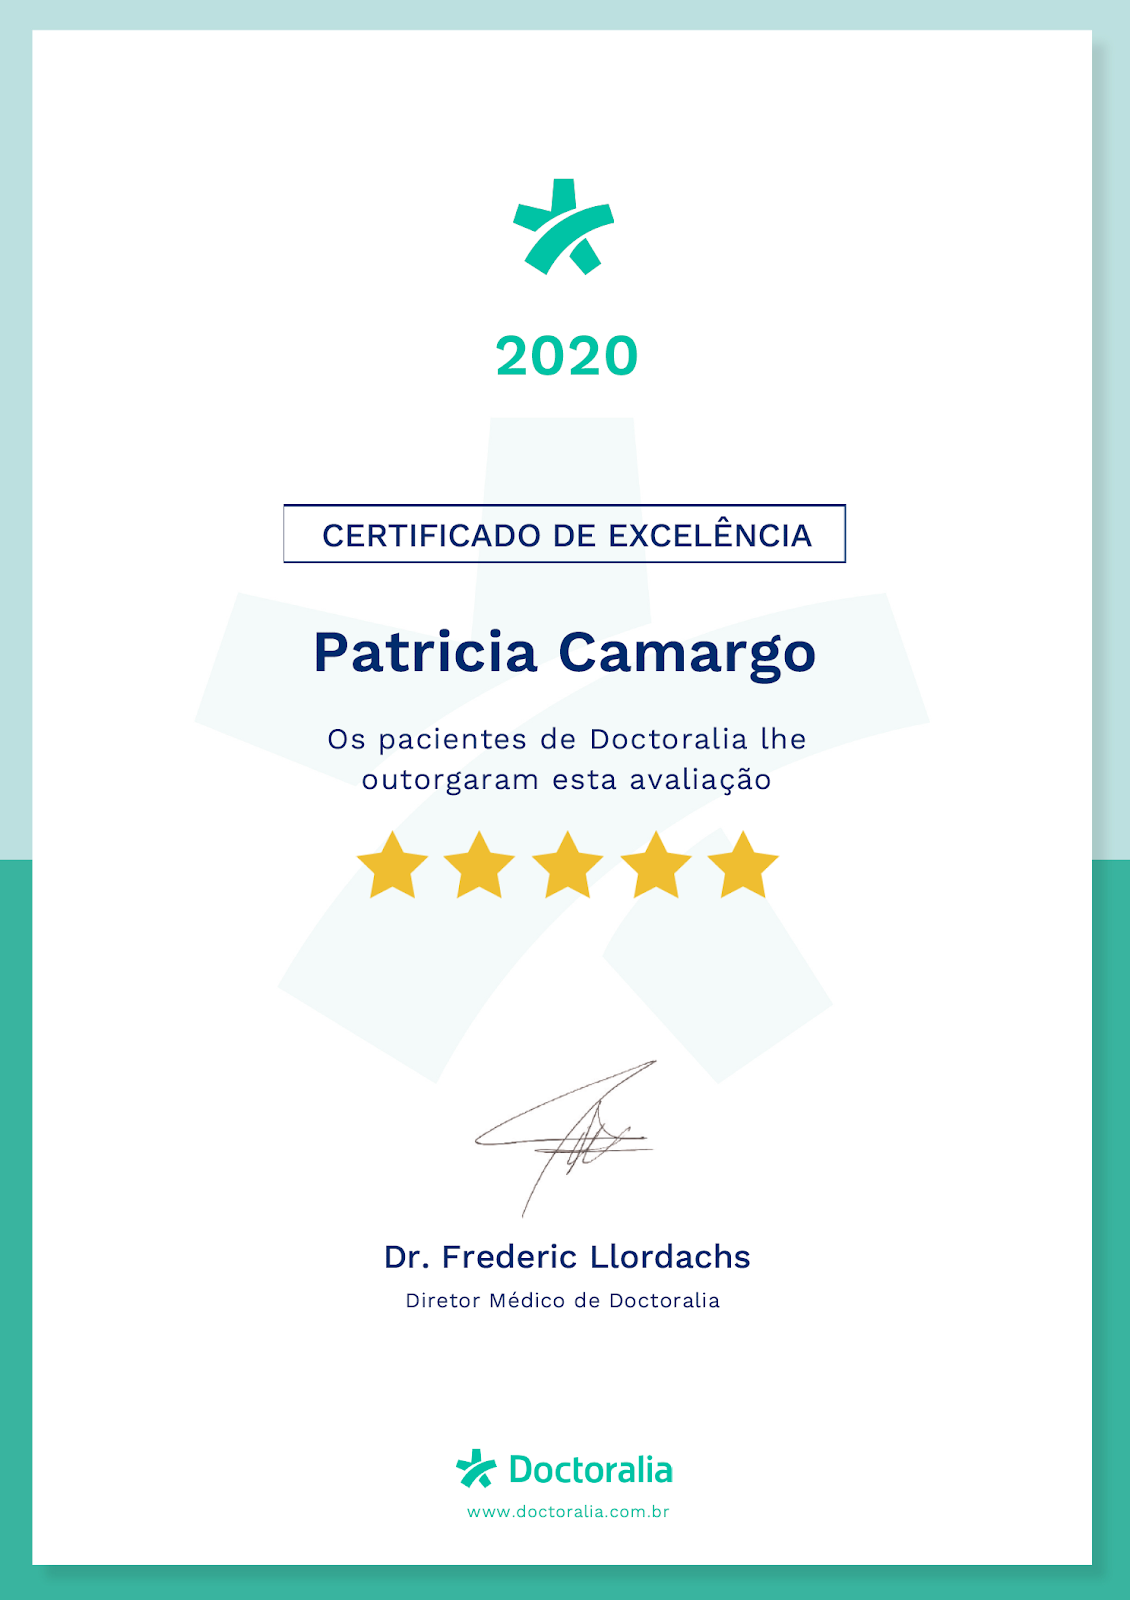 Certificado de Excelência Doctoralia 2020